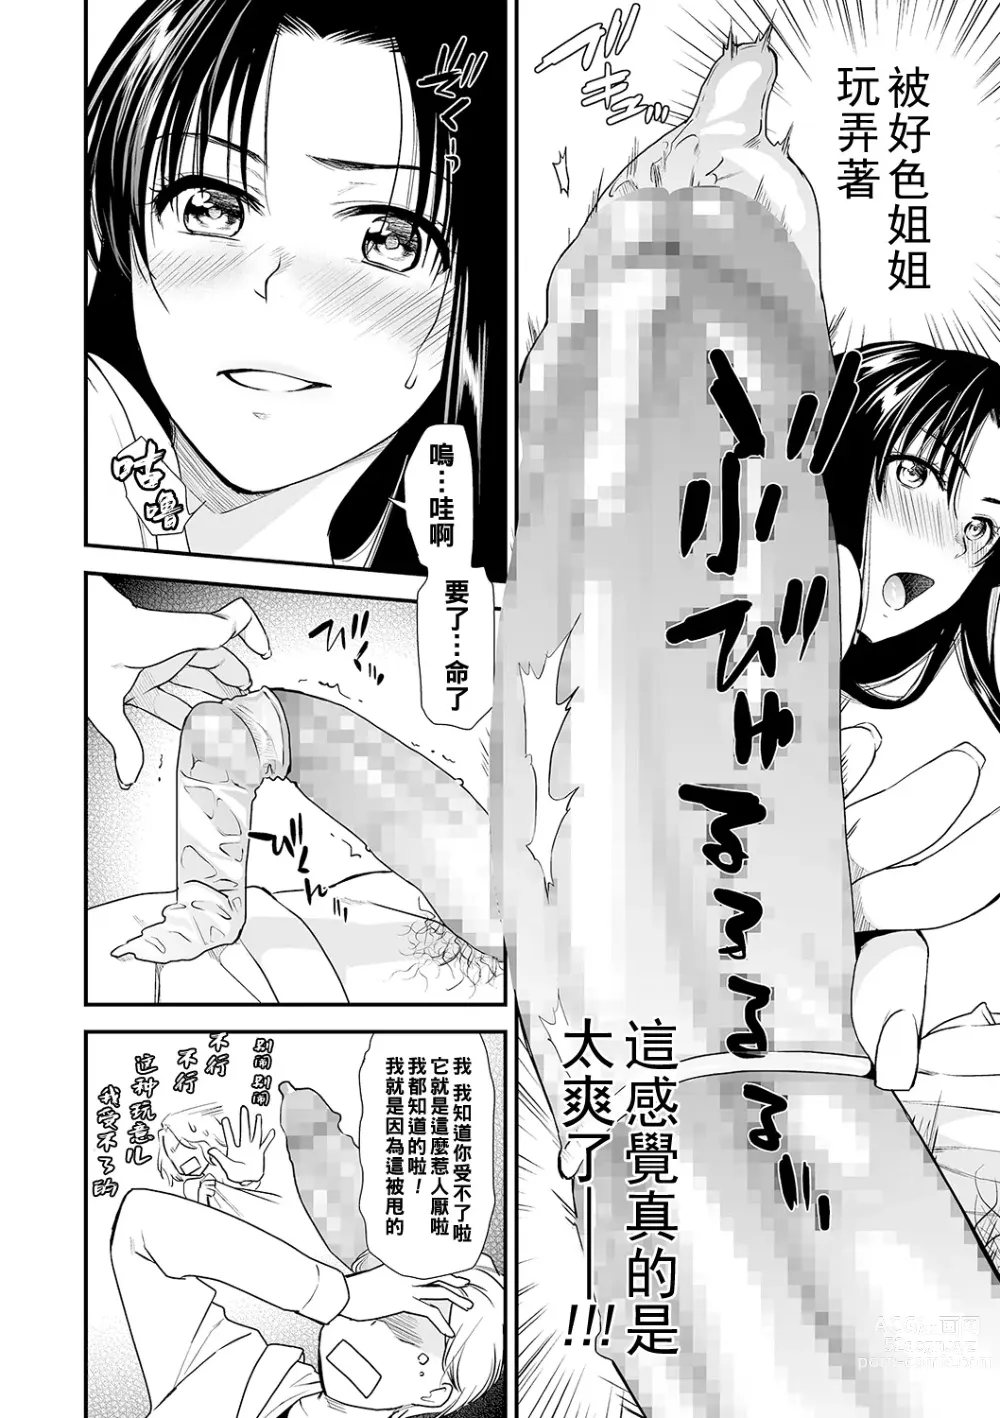 Page 6 of manga Eroi Ane no Sonzai